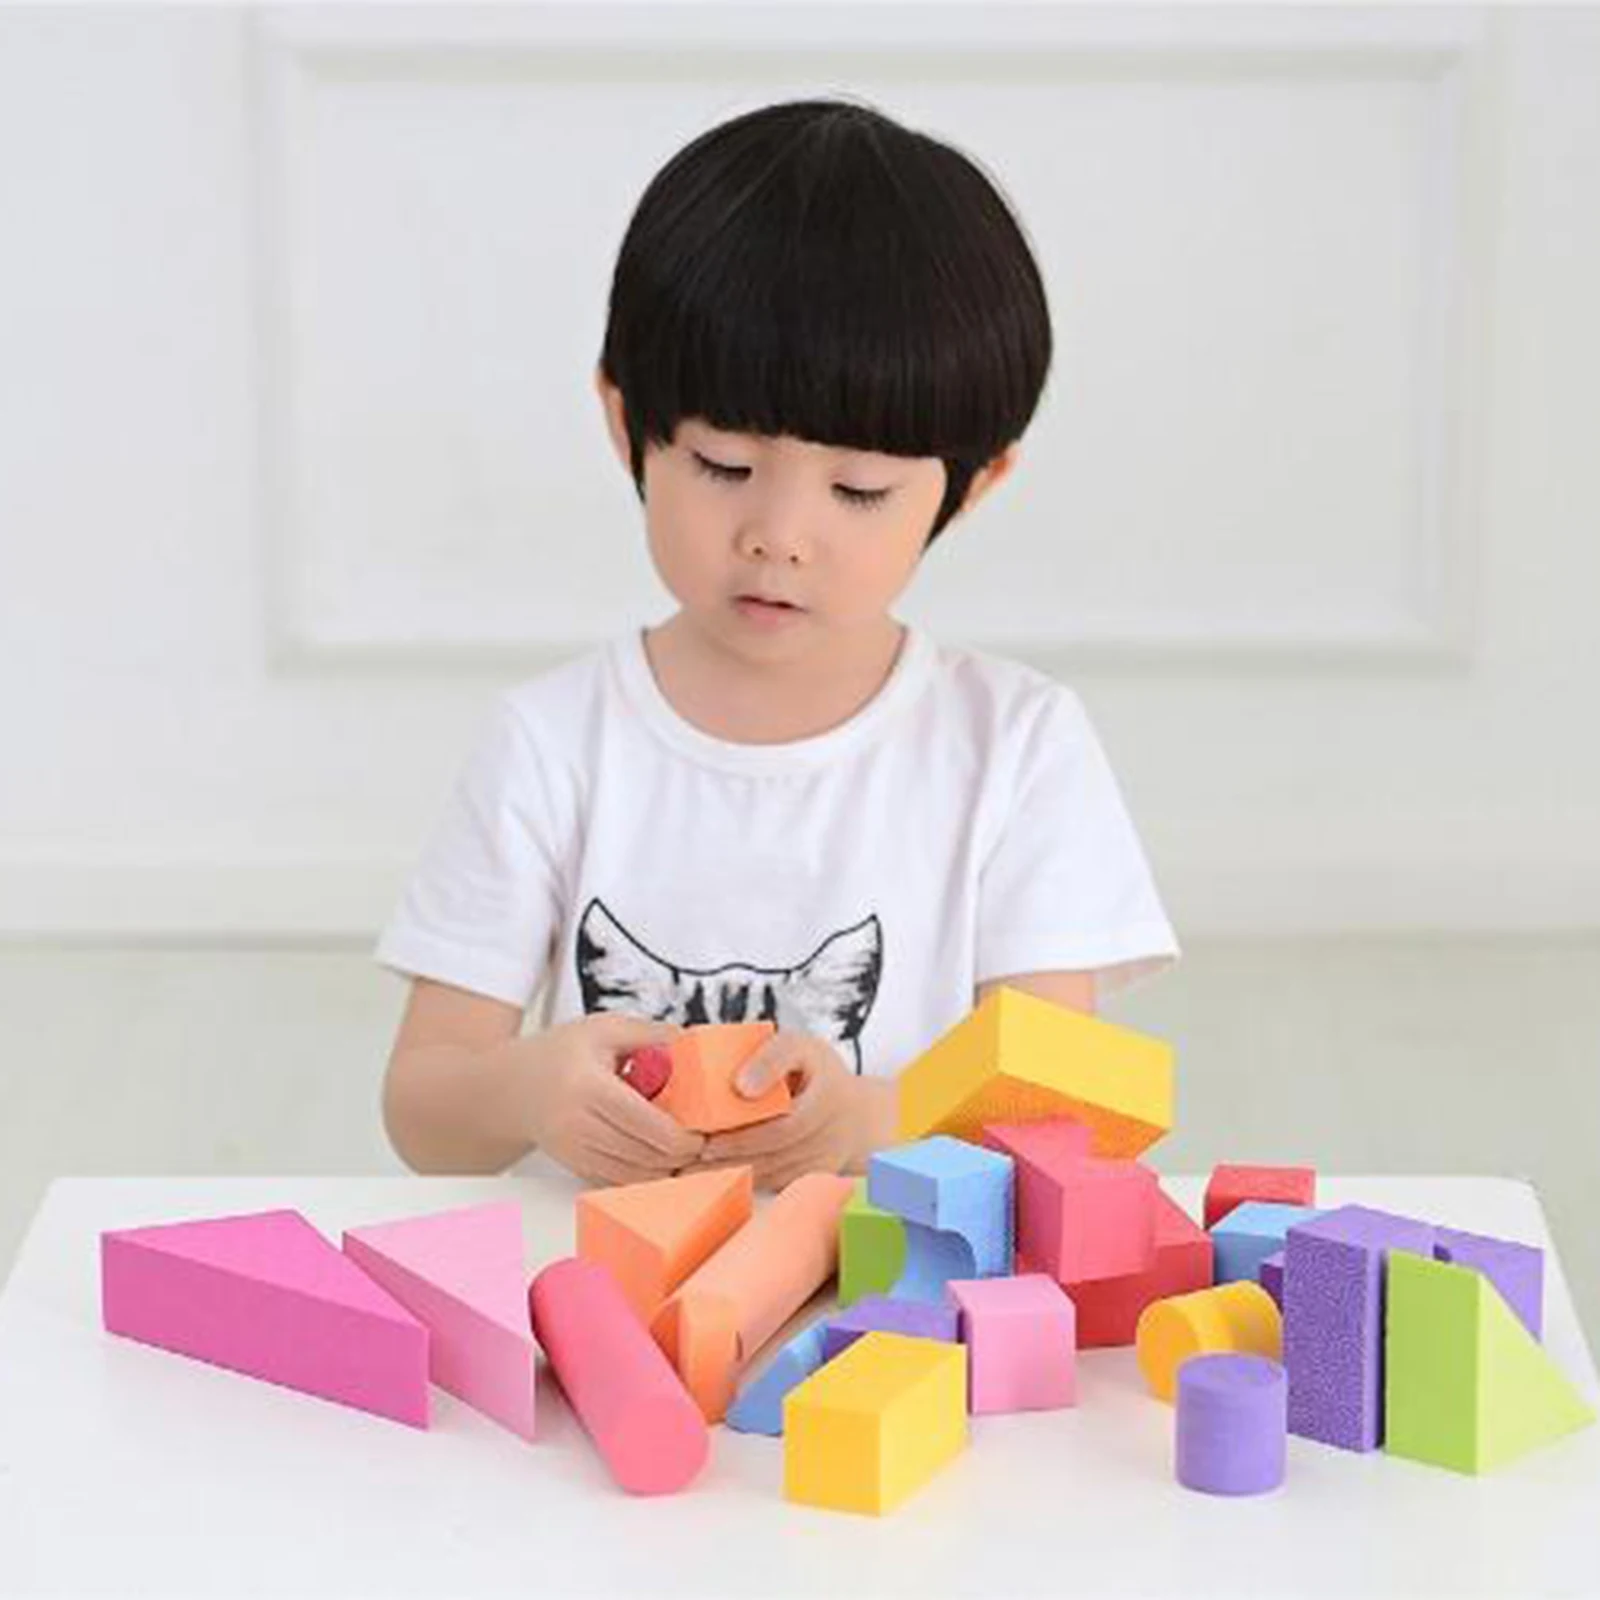 25pcs Foam Building Blocks Multi-colored Stacking Blocks Construction Toys